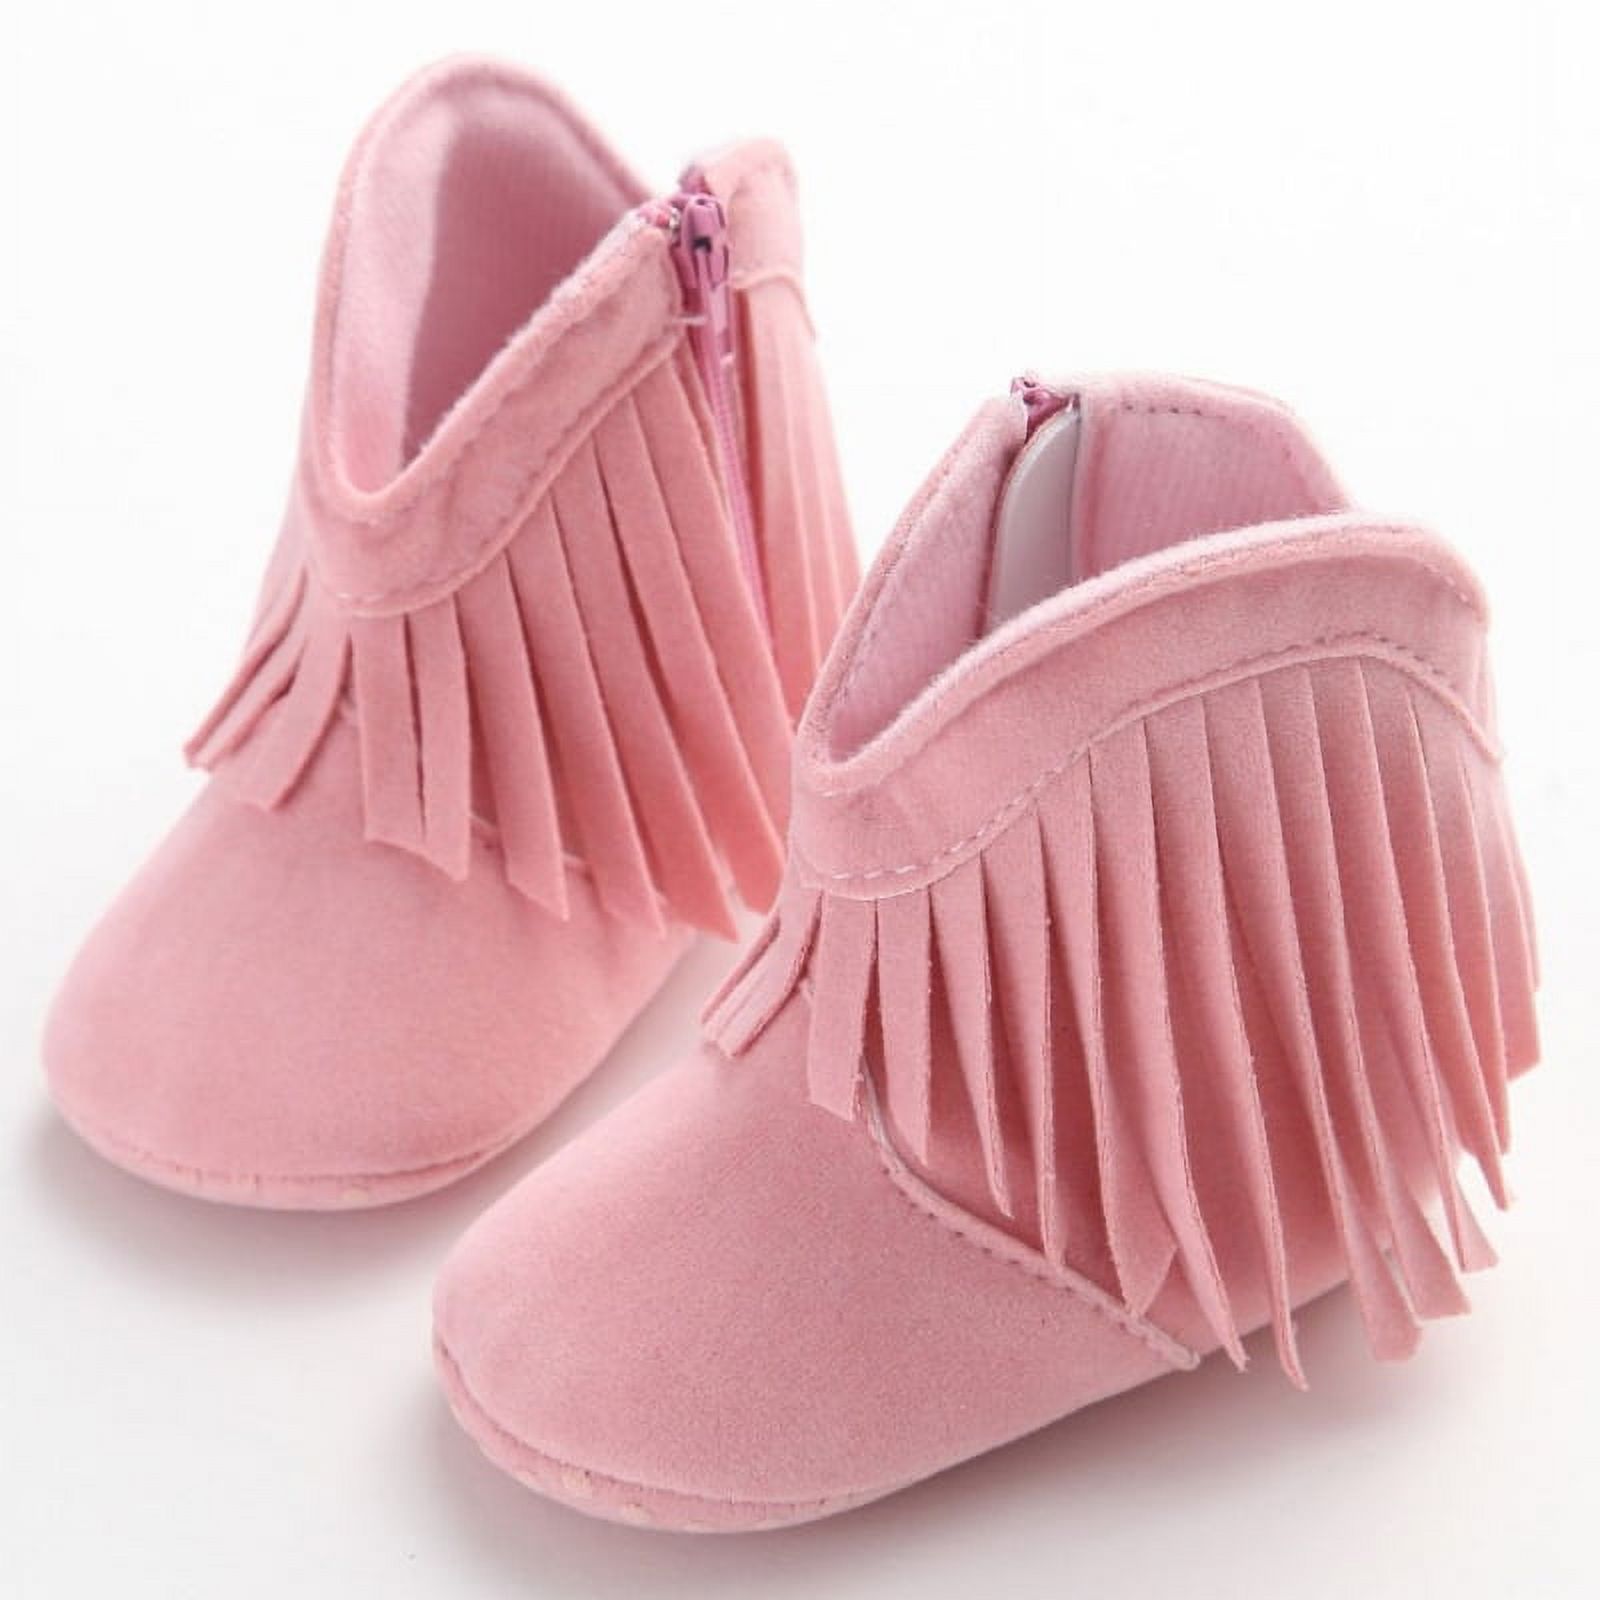 Finex Baby Boy Girl Tassel Boots Infant Toddler Soft Soled Winter Shoes - image 1 of 5